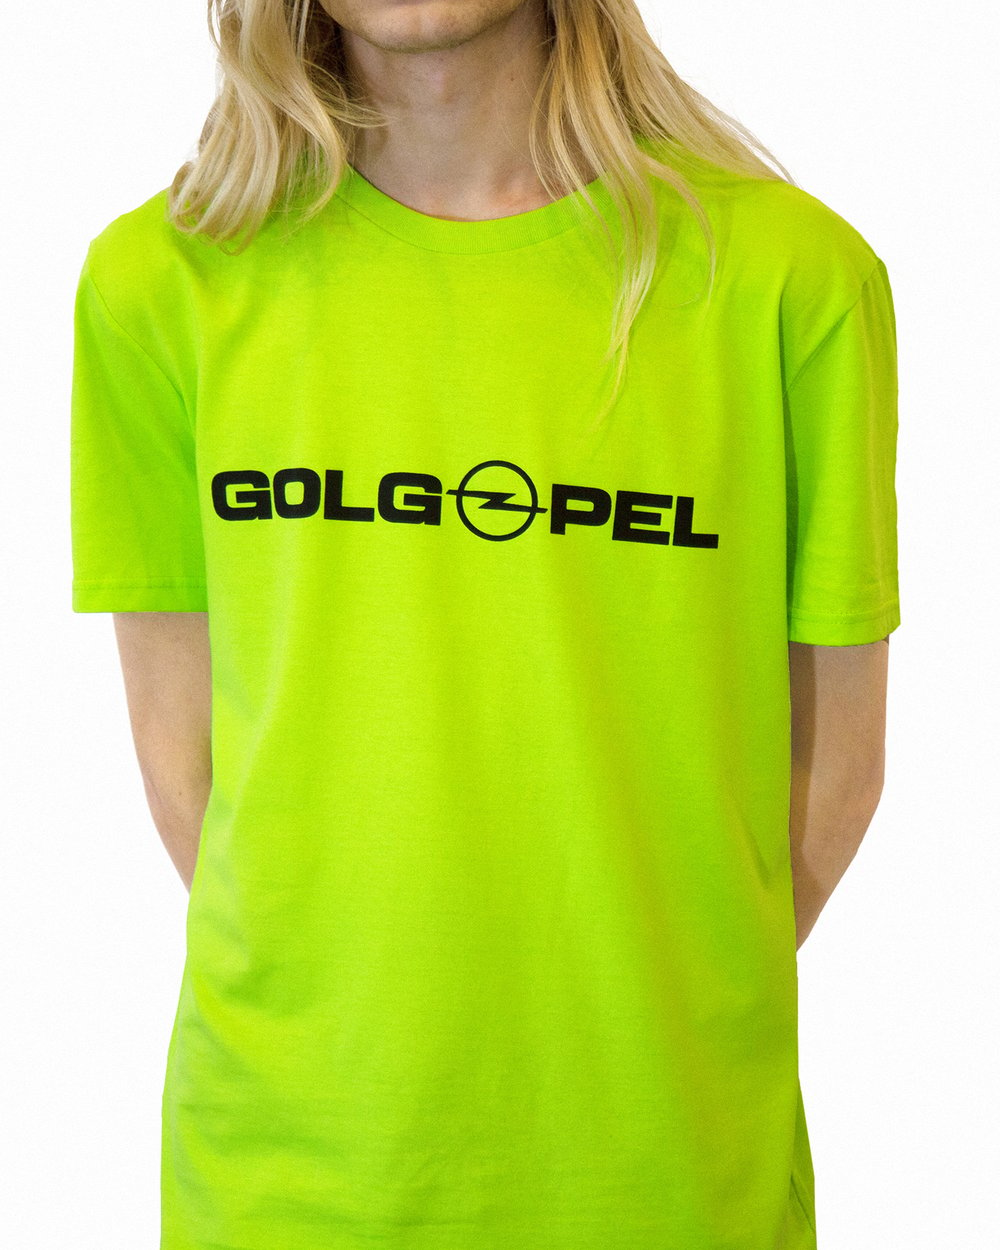 Golgopel Fluo Logo T-Shirt 